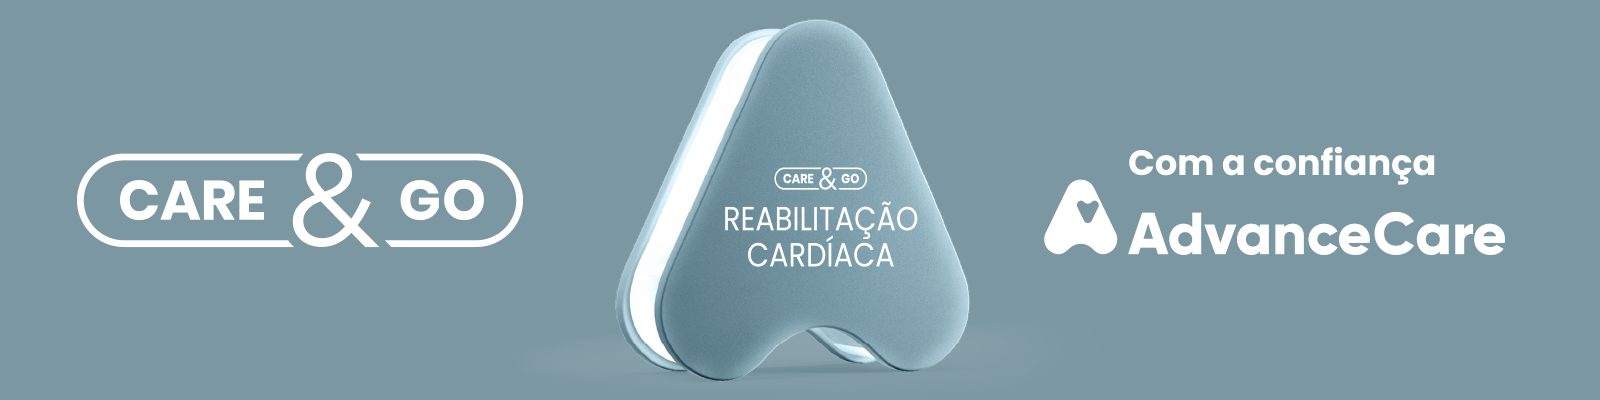 care-&-go-reabilitcao-cardiaca-banner-2